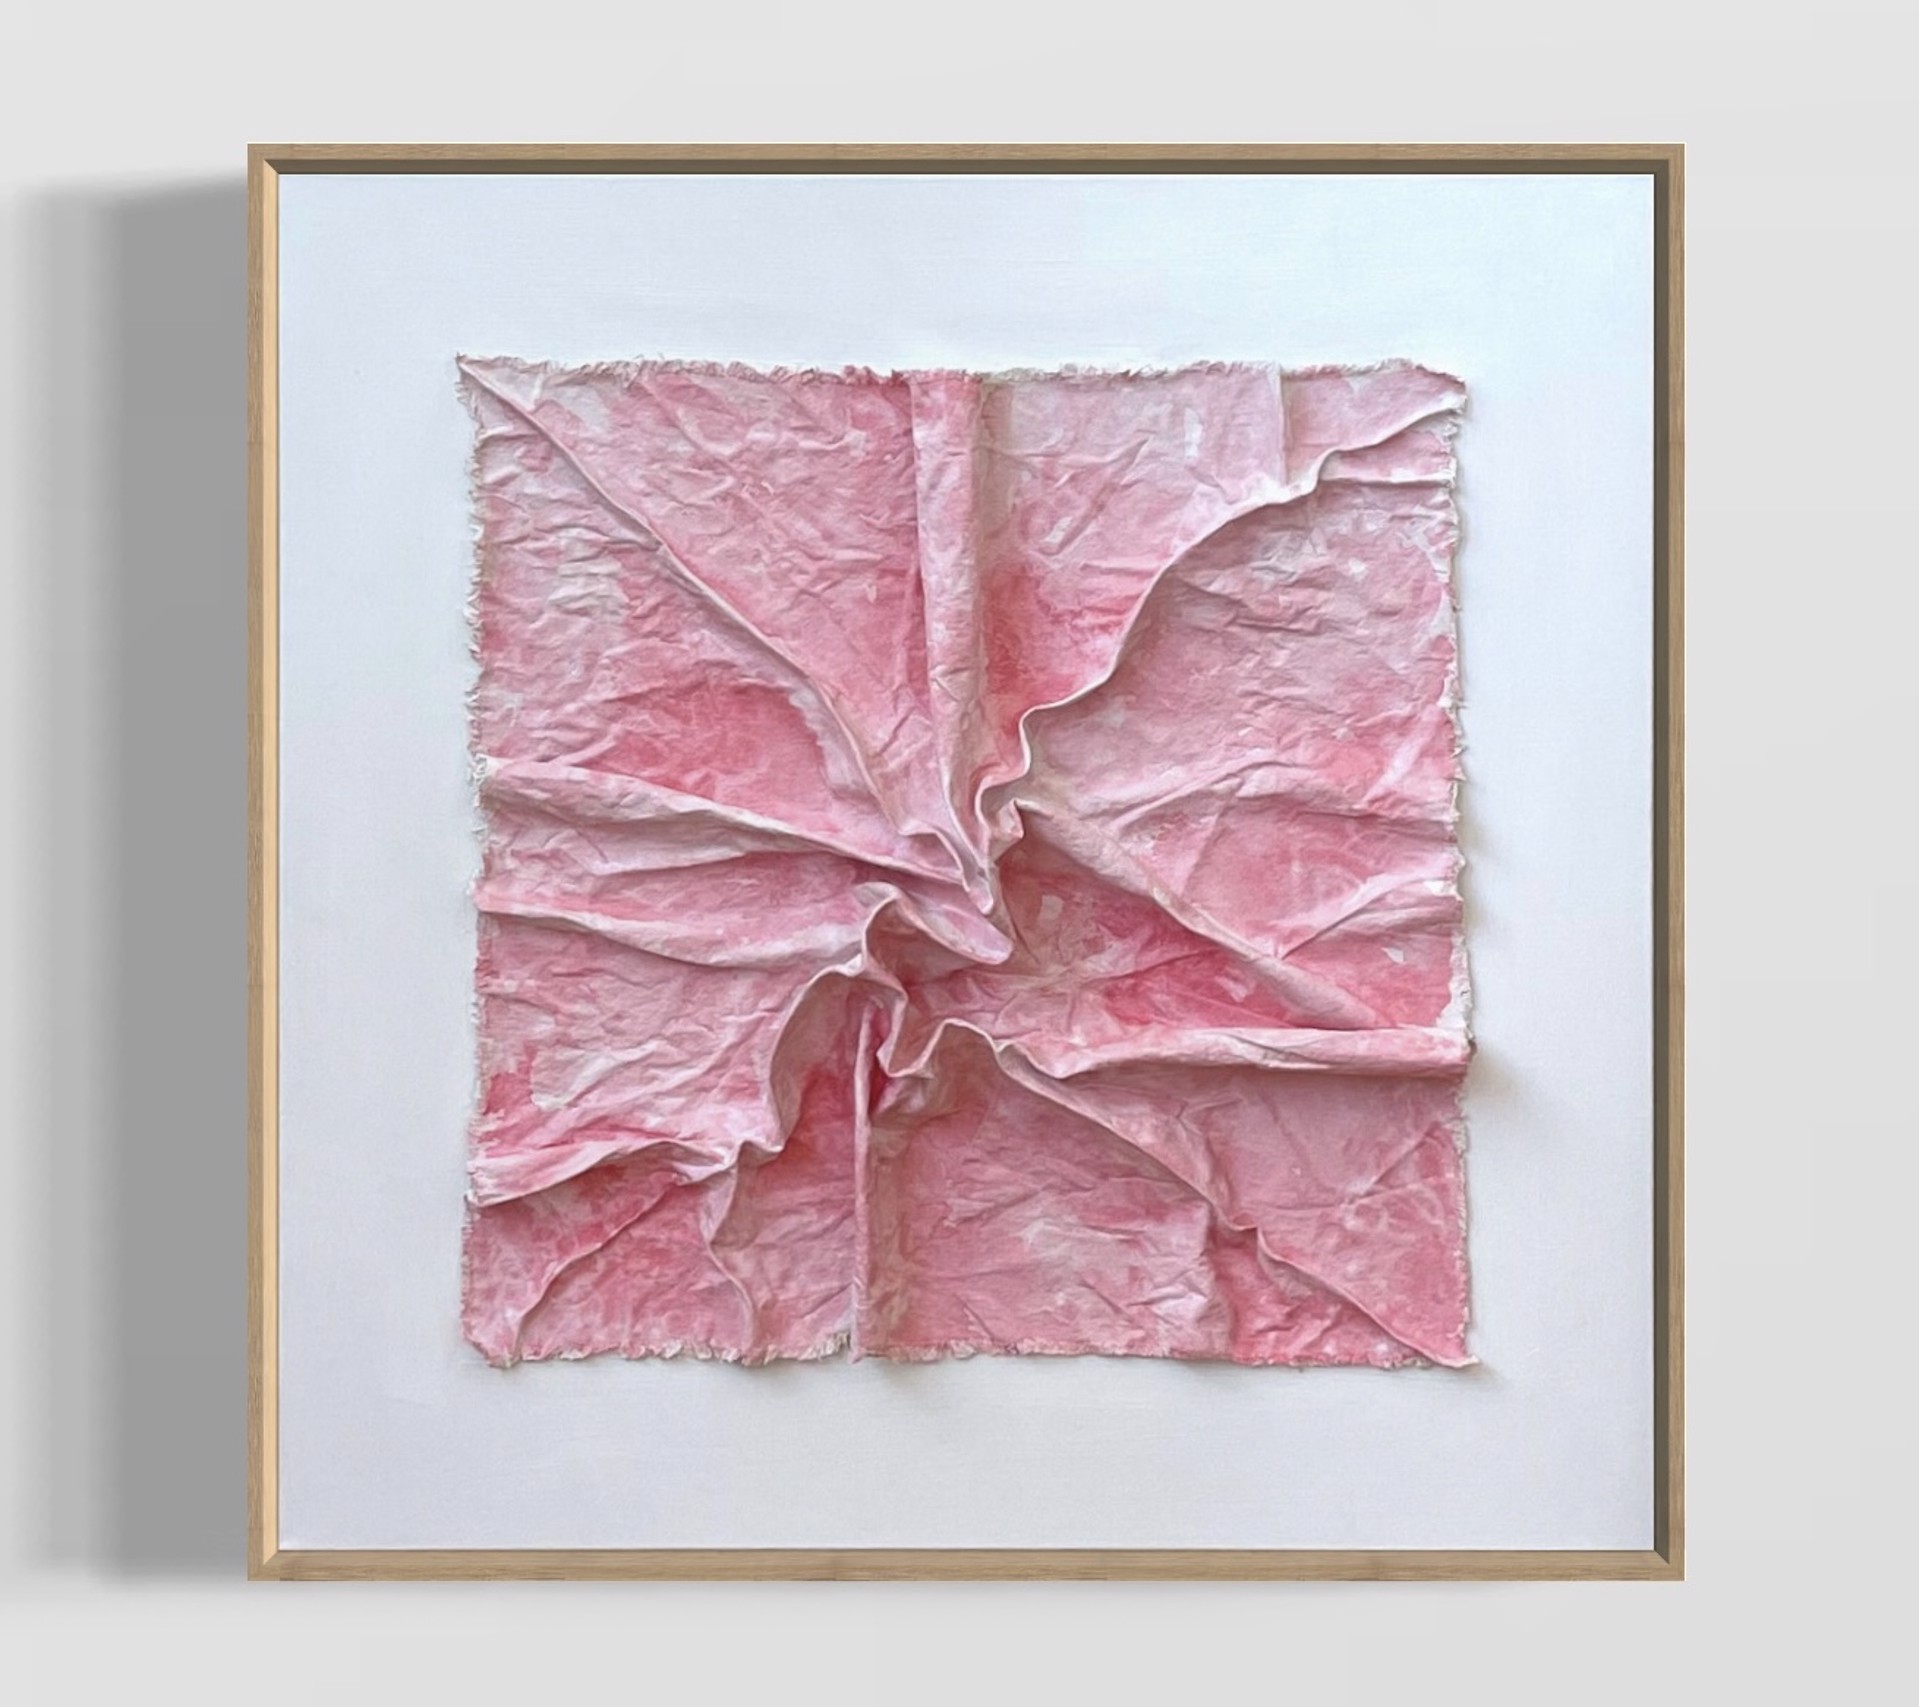 Blush Pink Wash by Michael Denny